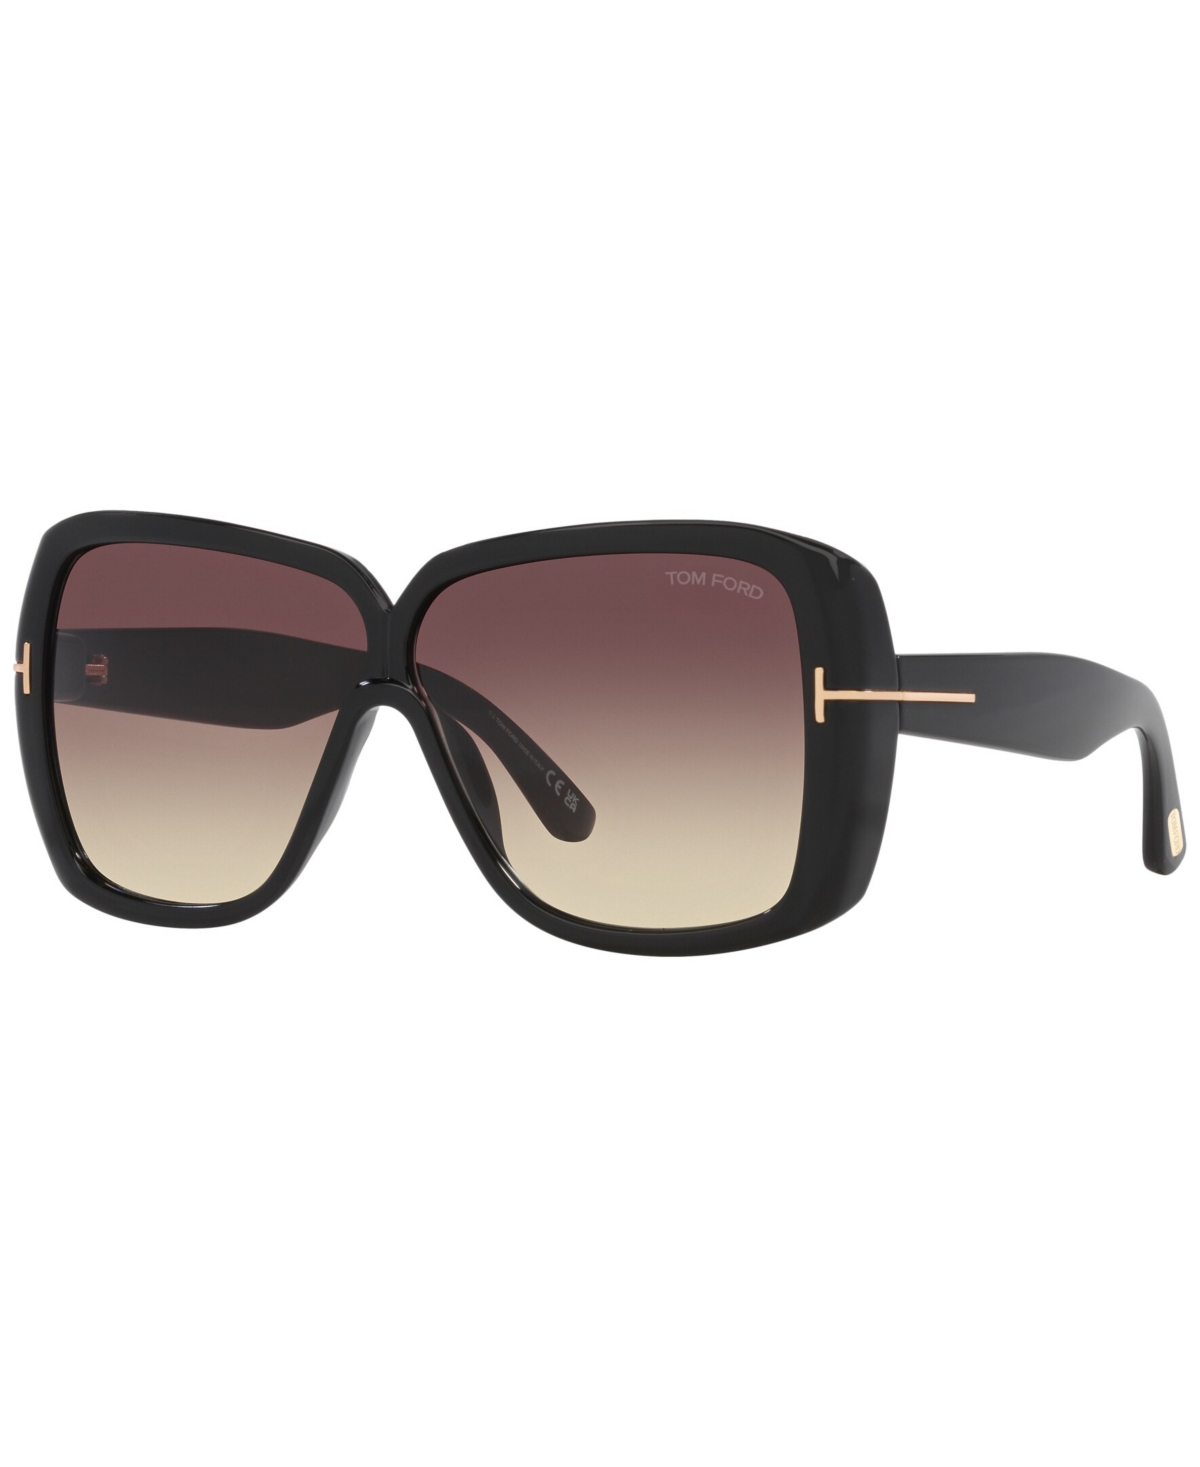 Tom Ford Women's Sunglasses, Marilyn Tr In Shiny Black